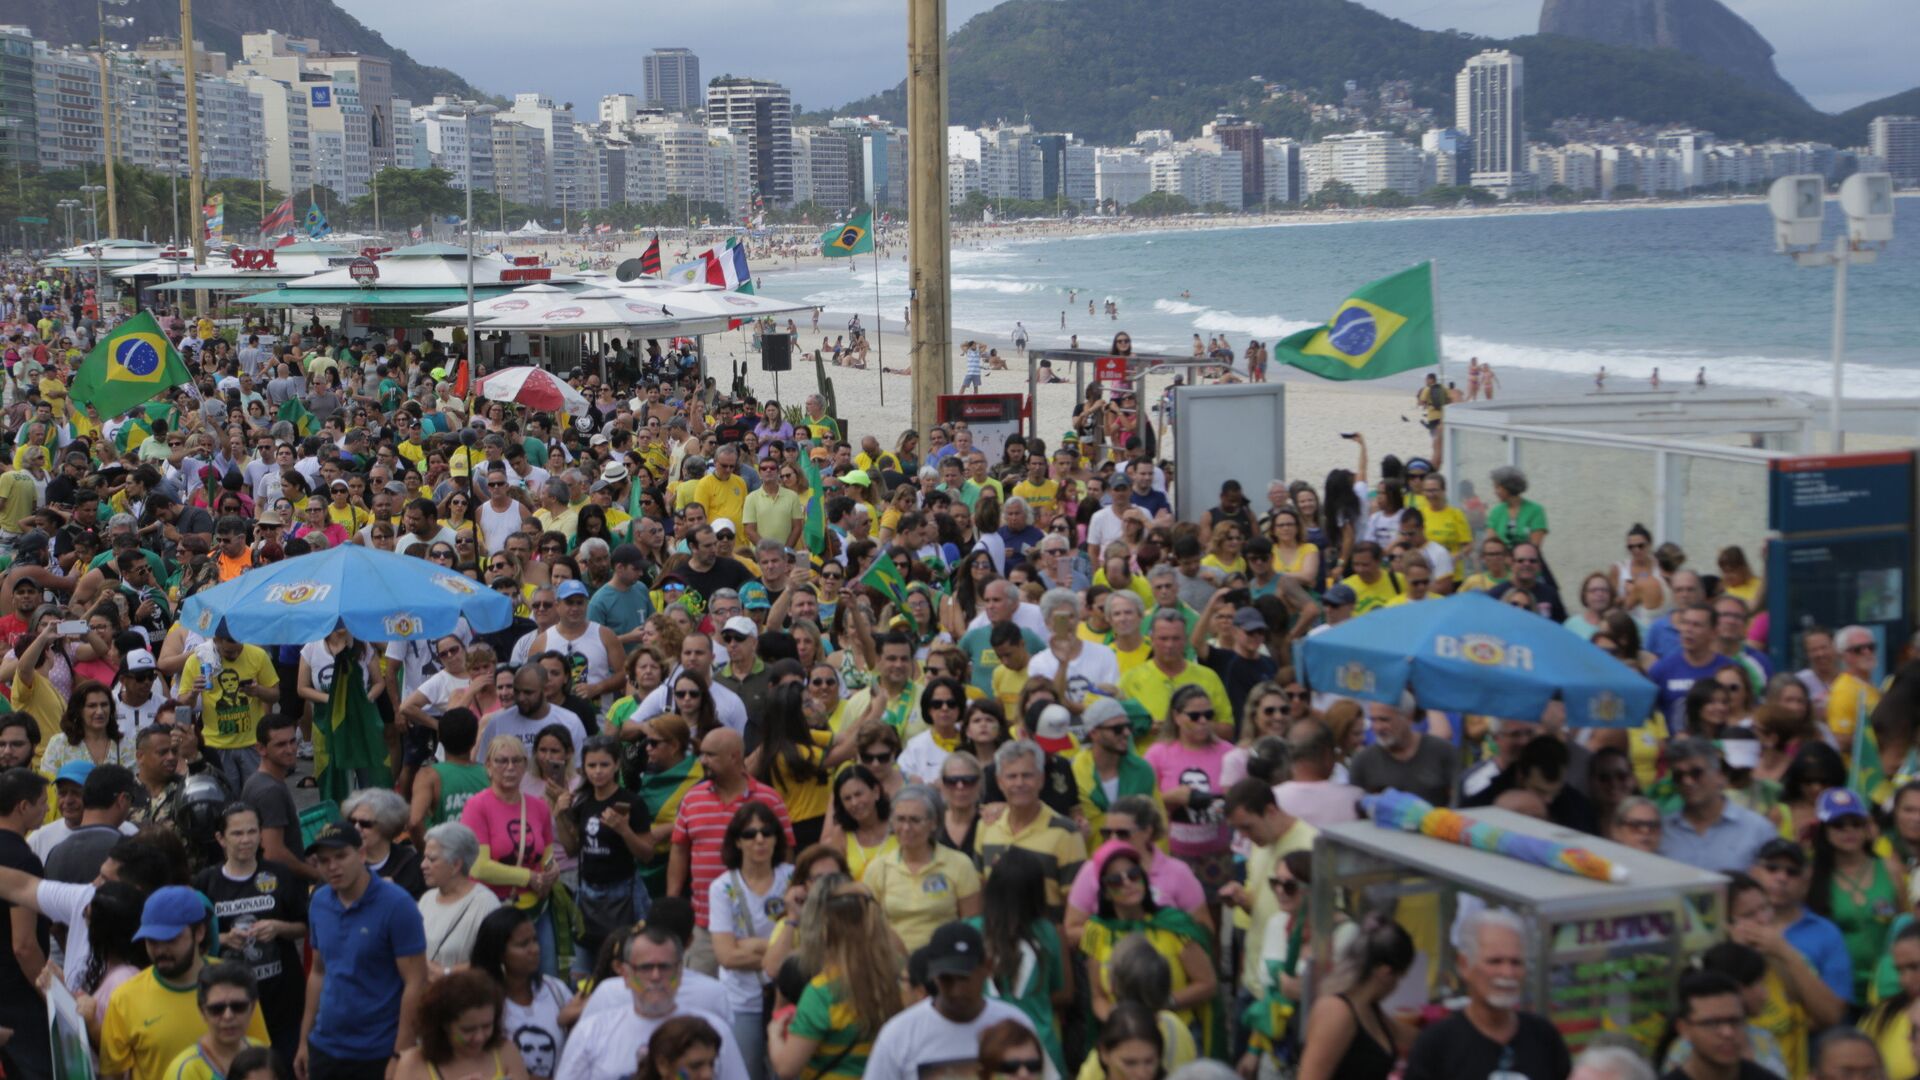 Jair Bolsonaro supporters rally in Rio de Janeiro. - Sputnik International, 1920, 07.09.2021